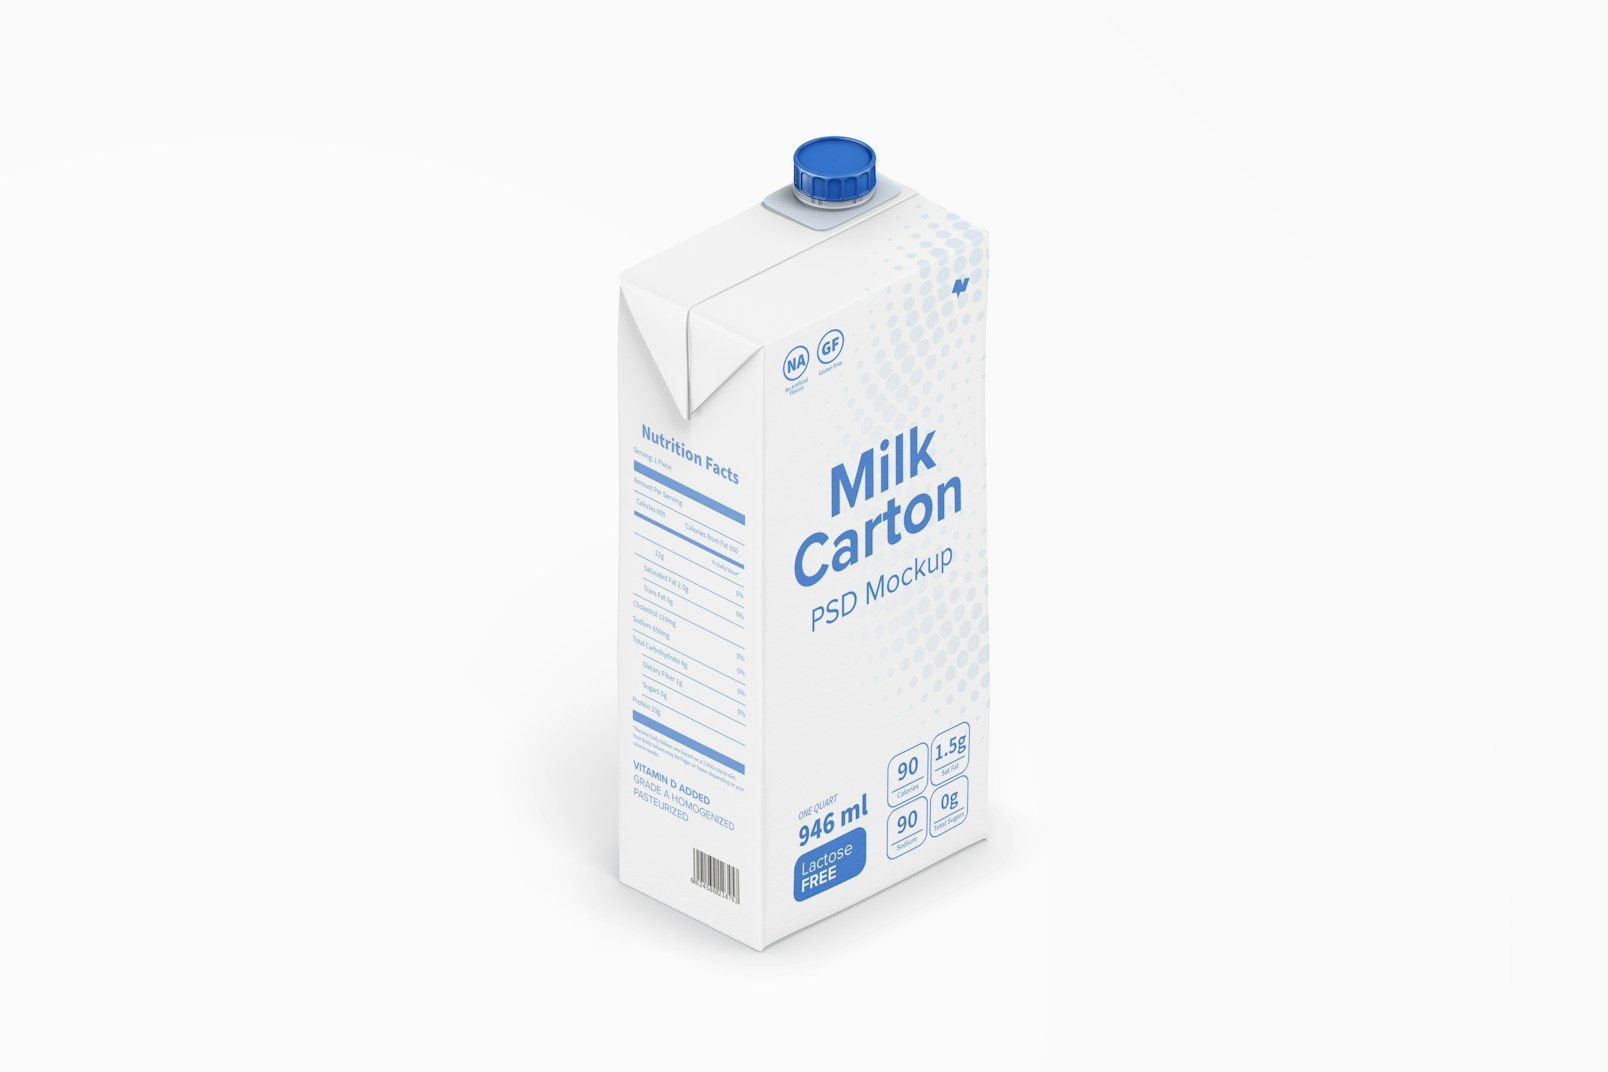 Milk Carton Mockup, Isometric View